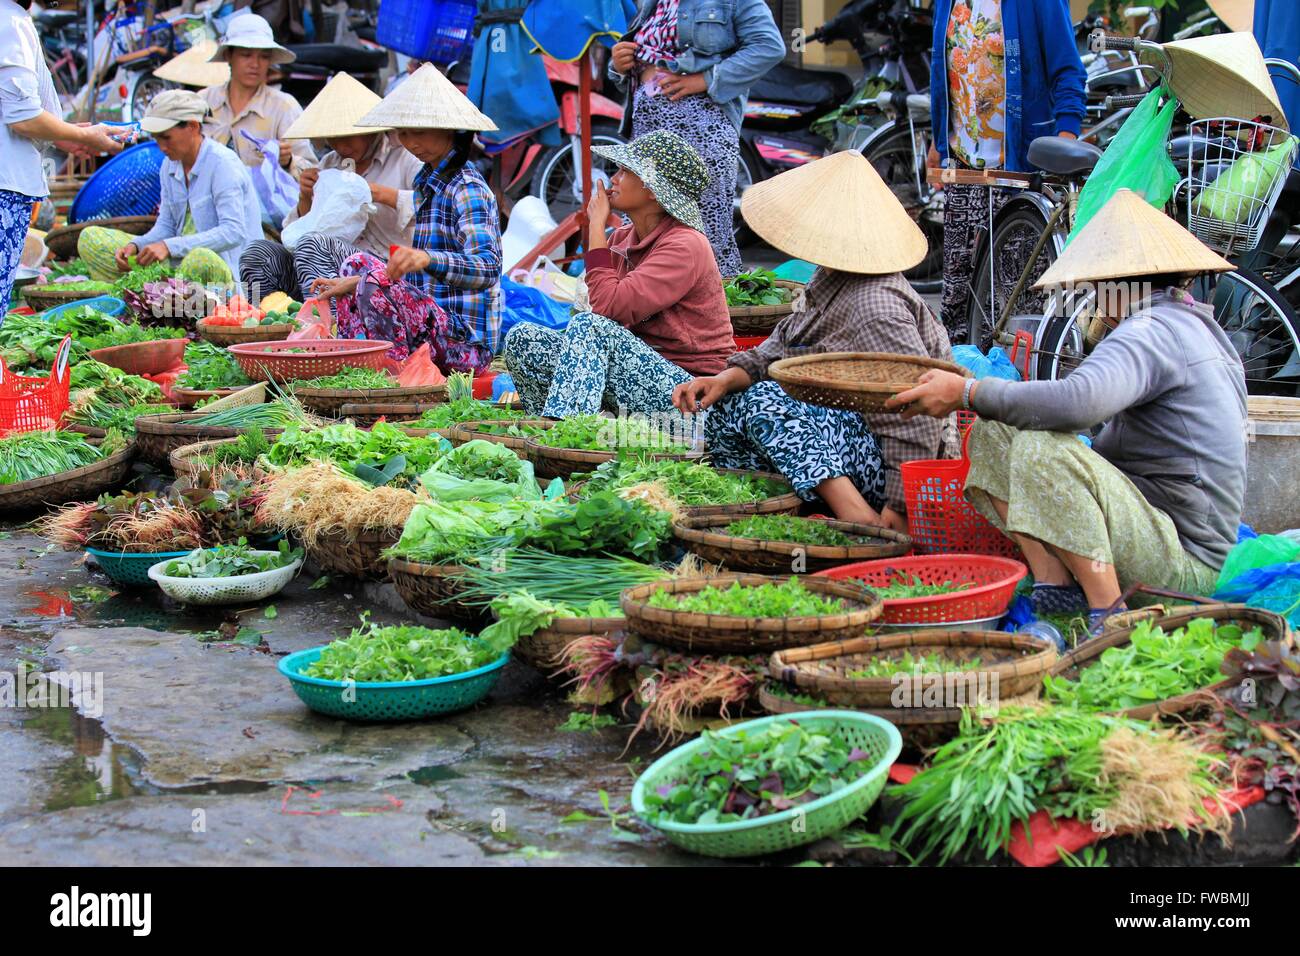 Onorevoli vietnamita la vendita di verdure fresche sul marciapiede al mercato, Hoi An, Vietnam Asia Foto Stock